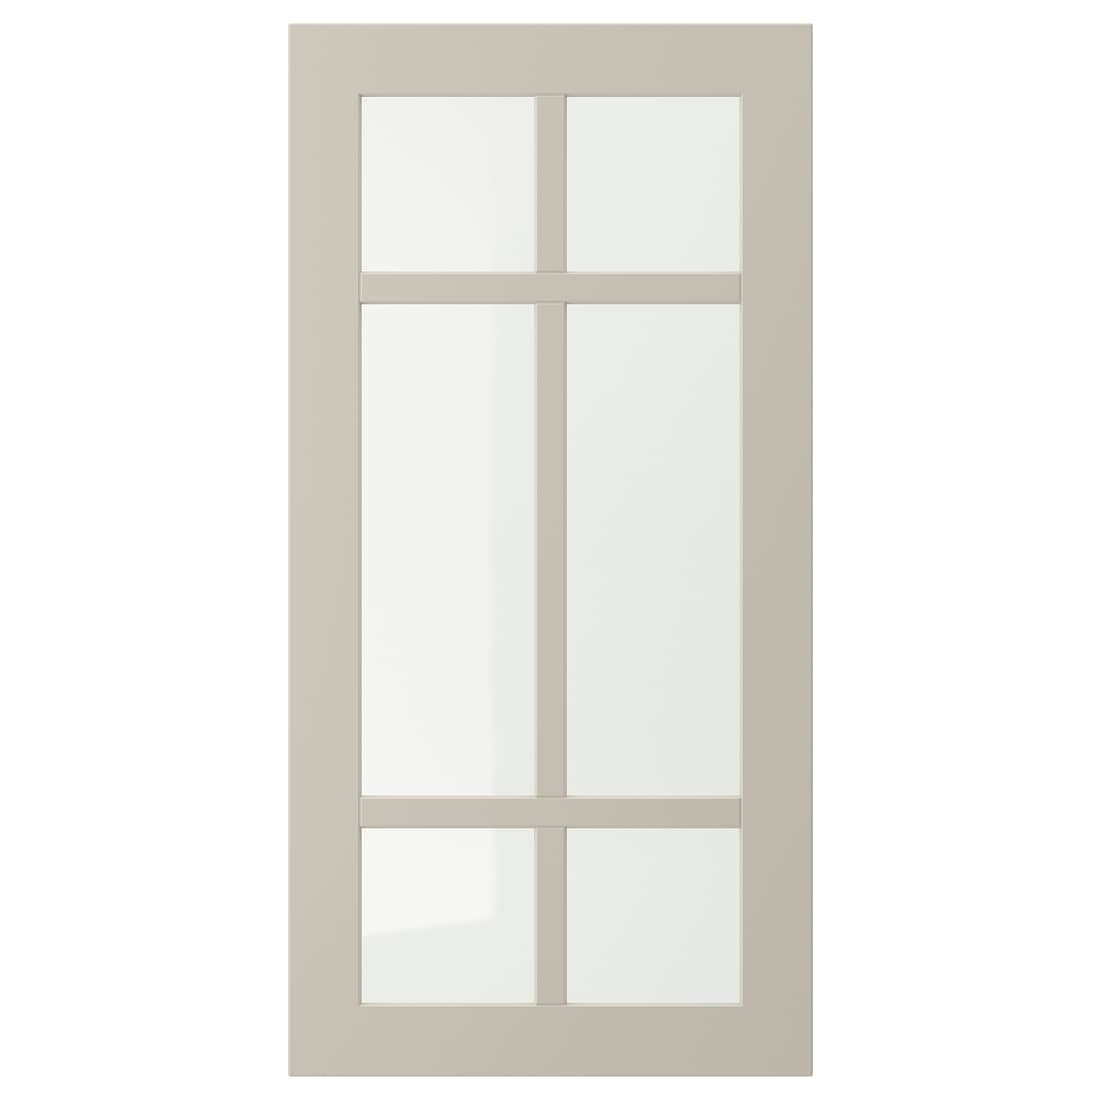 IKEA STENSUND СТЕНСУНД Стеклянная дверь, бежевый, 40x80 см 30453207 304.532.07